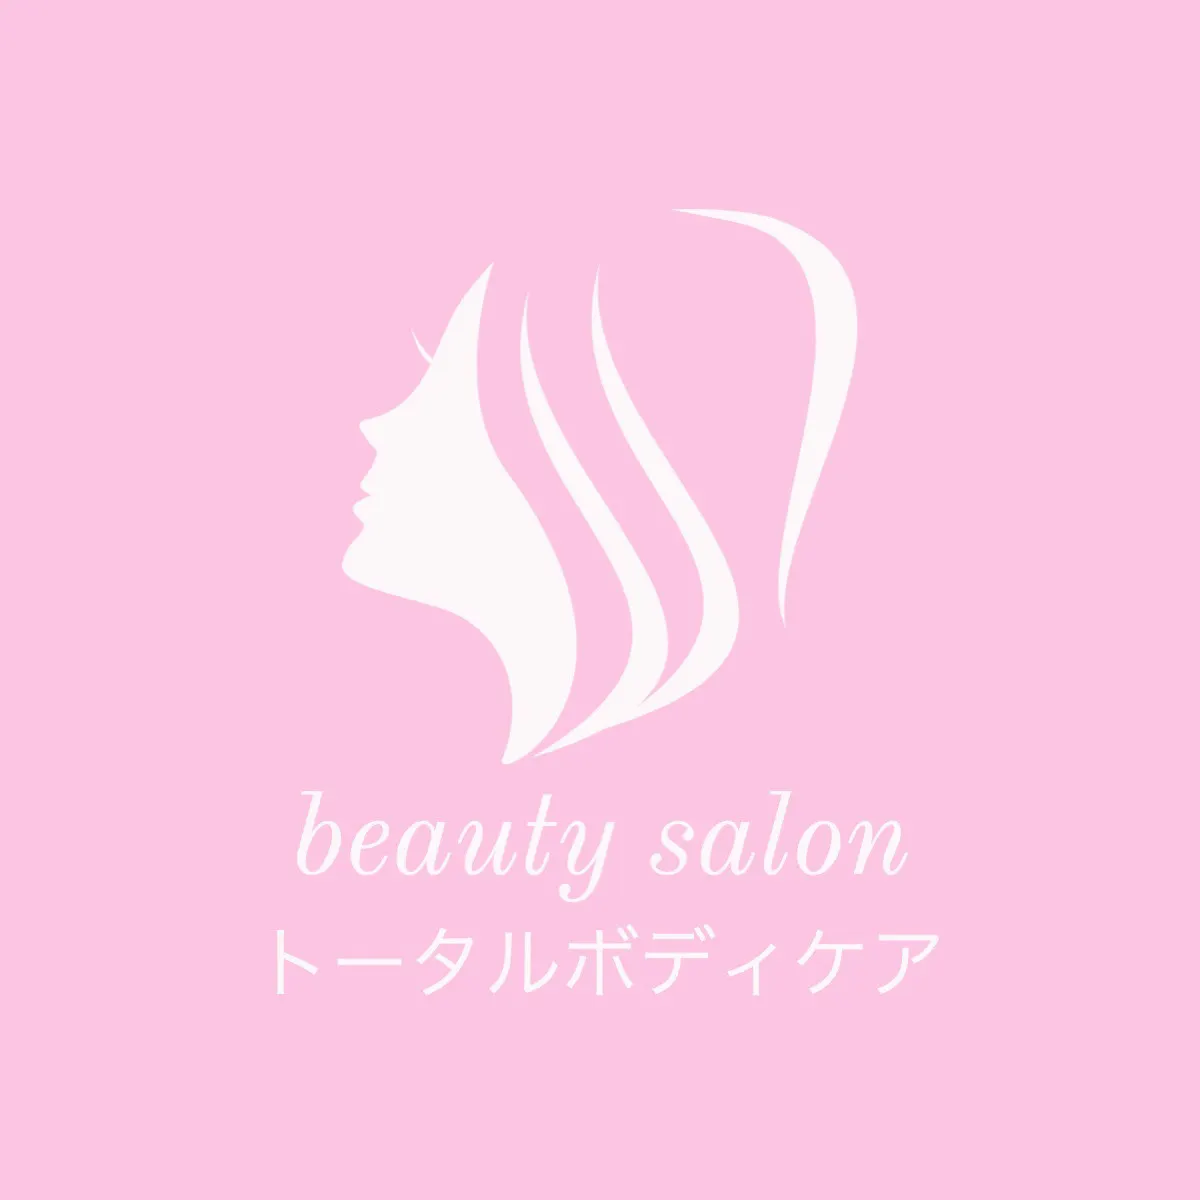 Beauty salon Total body care logo